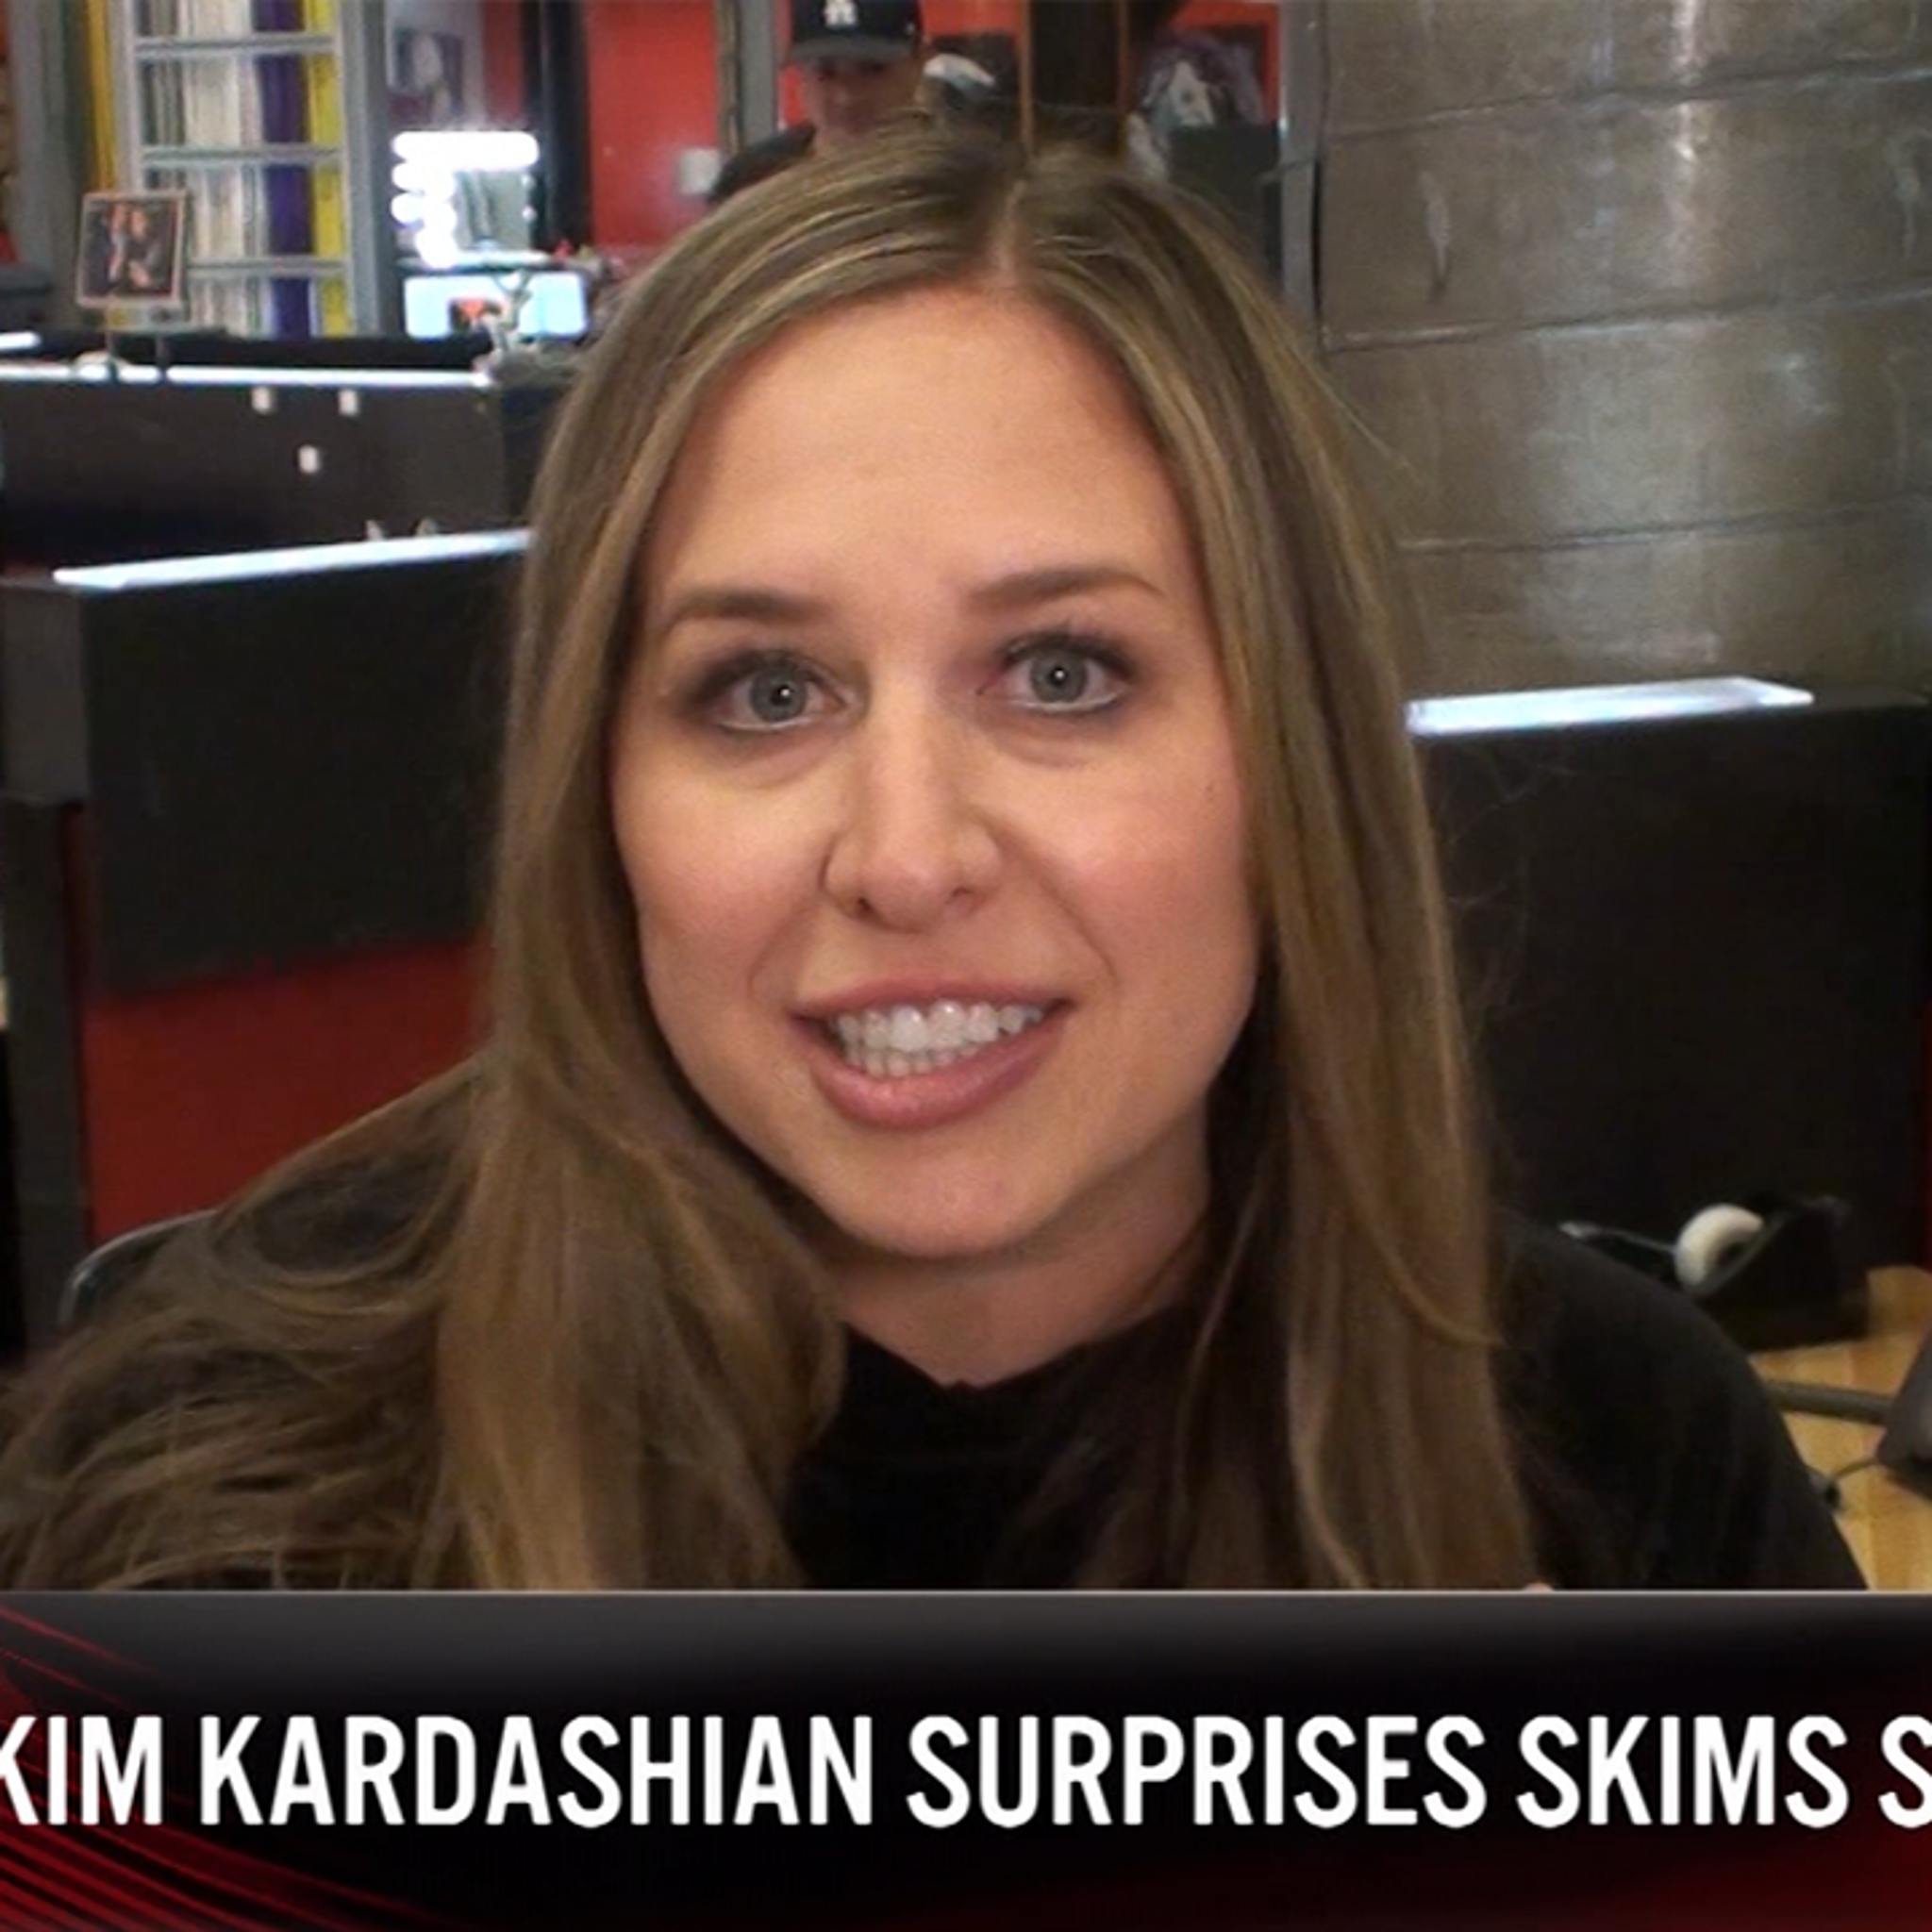 kimkardashian & @khloekardashian rock hot outfits to the opening of the @skims  pop-up shop! #KimKardashian #KhloeKardashian Photos: Back